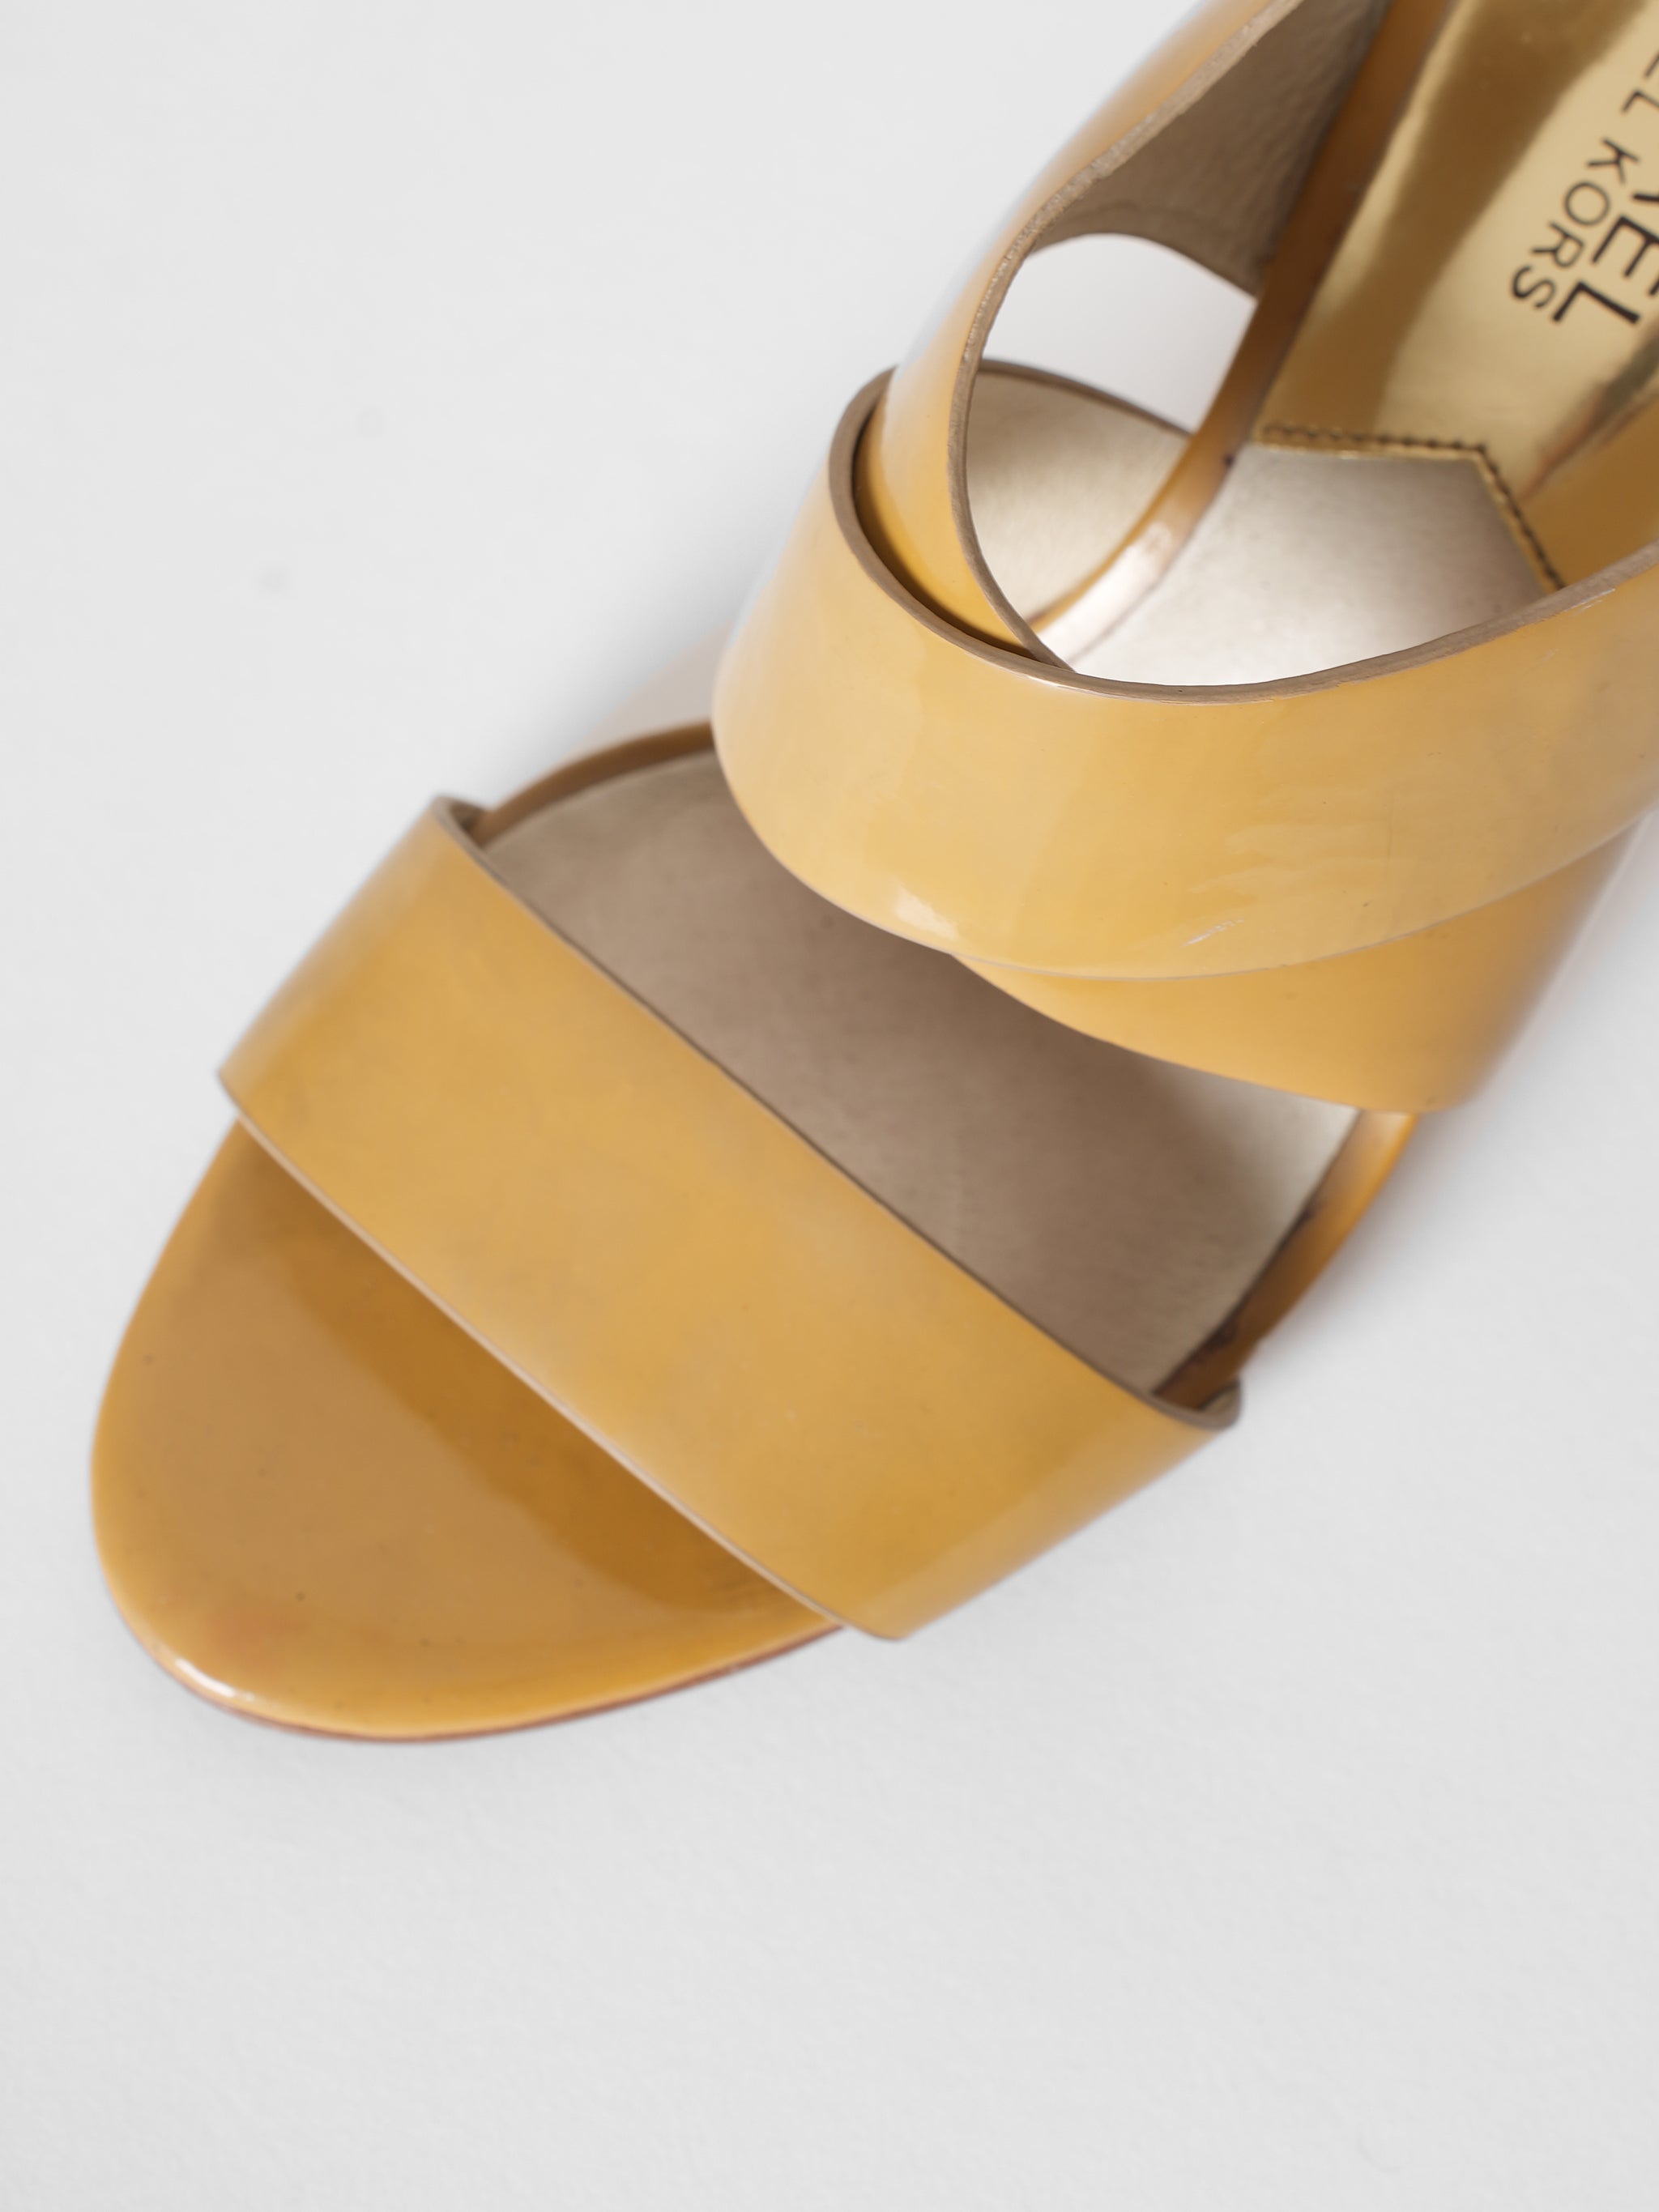 Michael Kors Sling Back Patent Leather Sandals